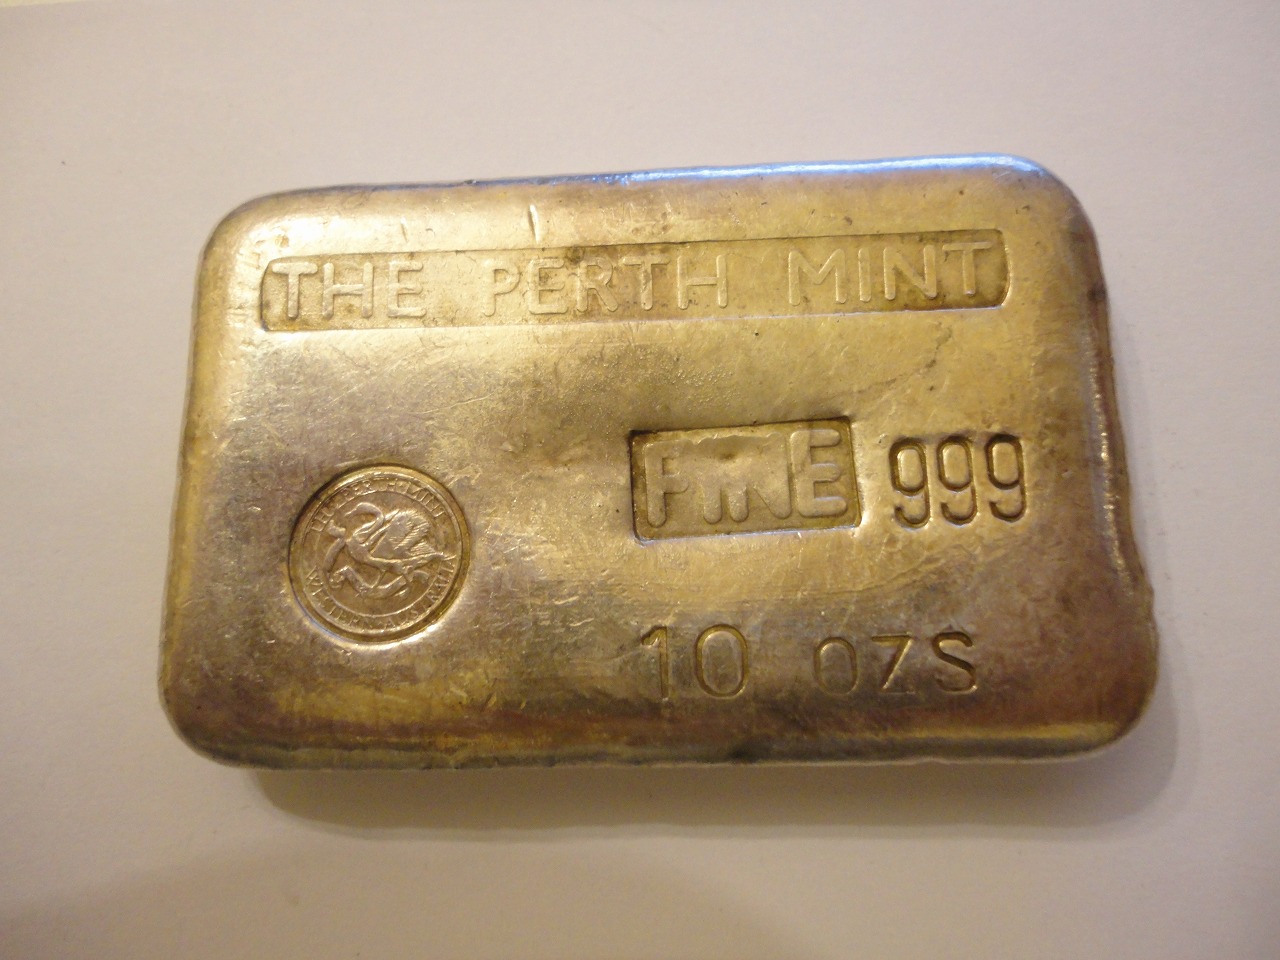 silver bar serial number 10041986